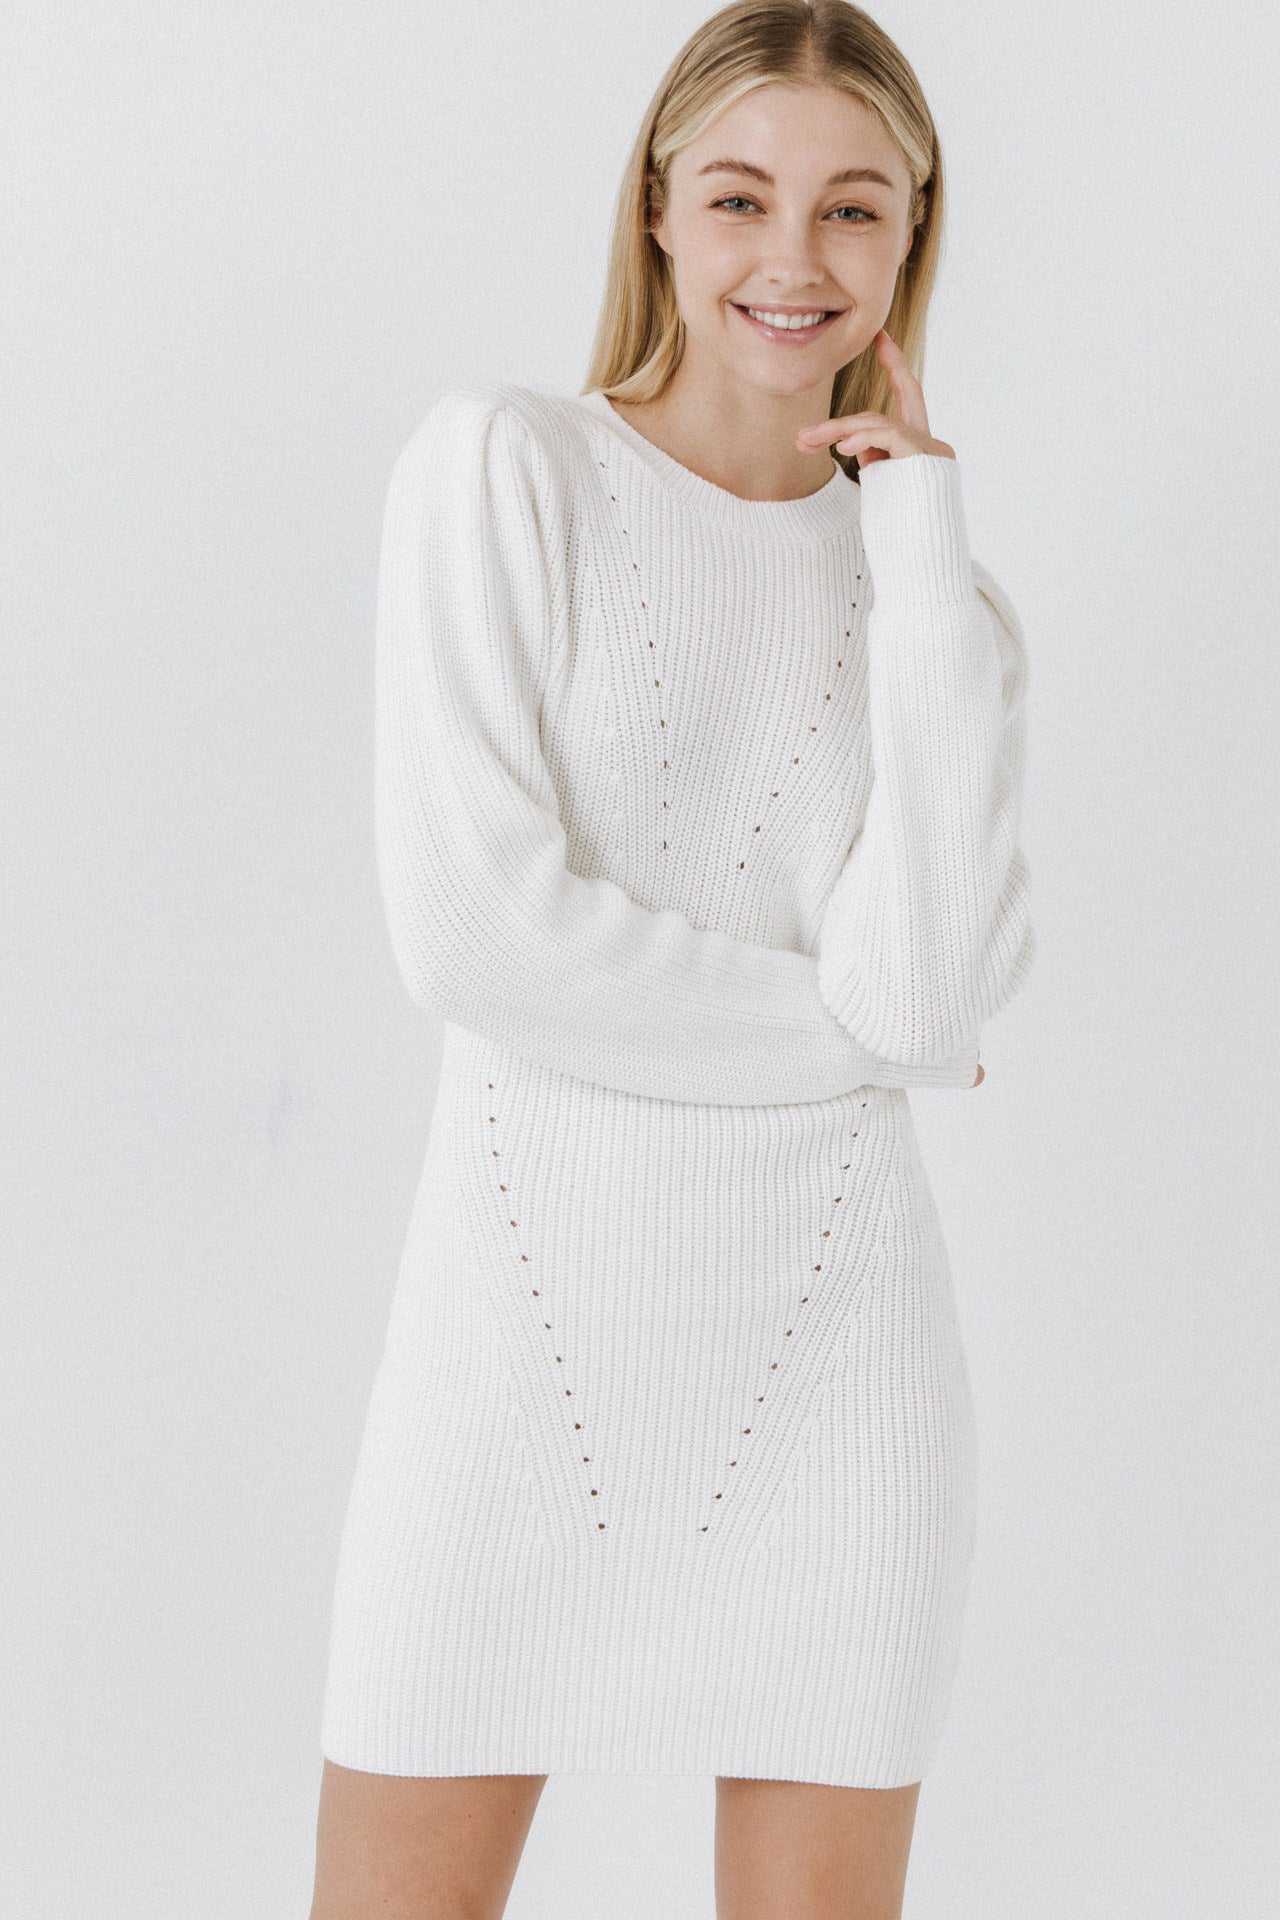 Ivory Sweater Dress - Mini Sweater Dress - Cable Knit Mini Dress